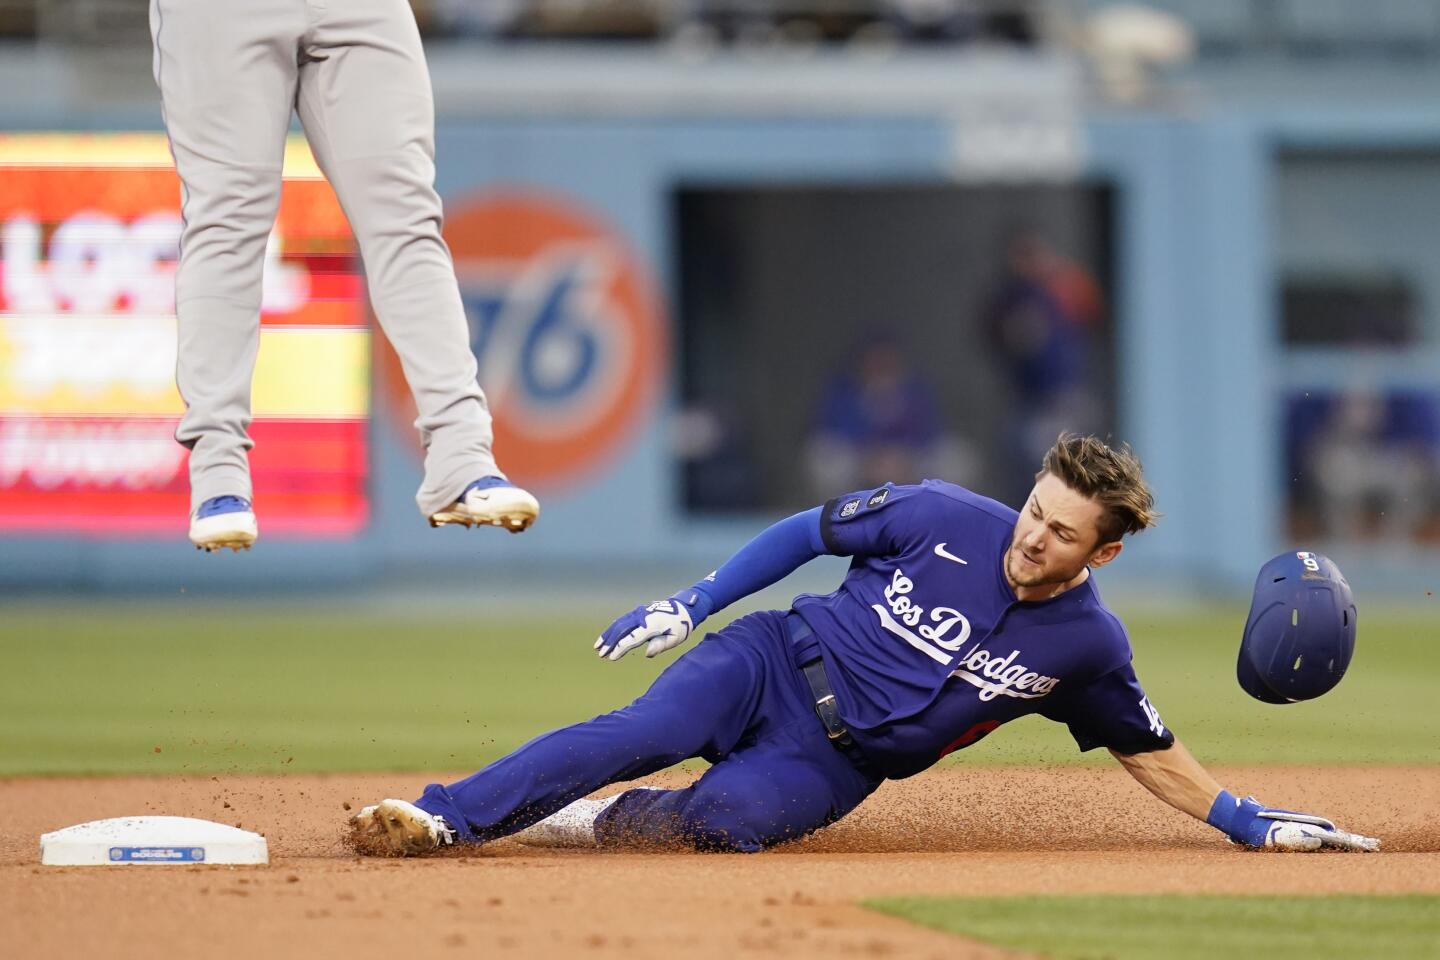 Dodgers – Rockies: Trea Turner delivered smooth slide into home again